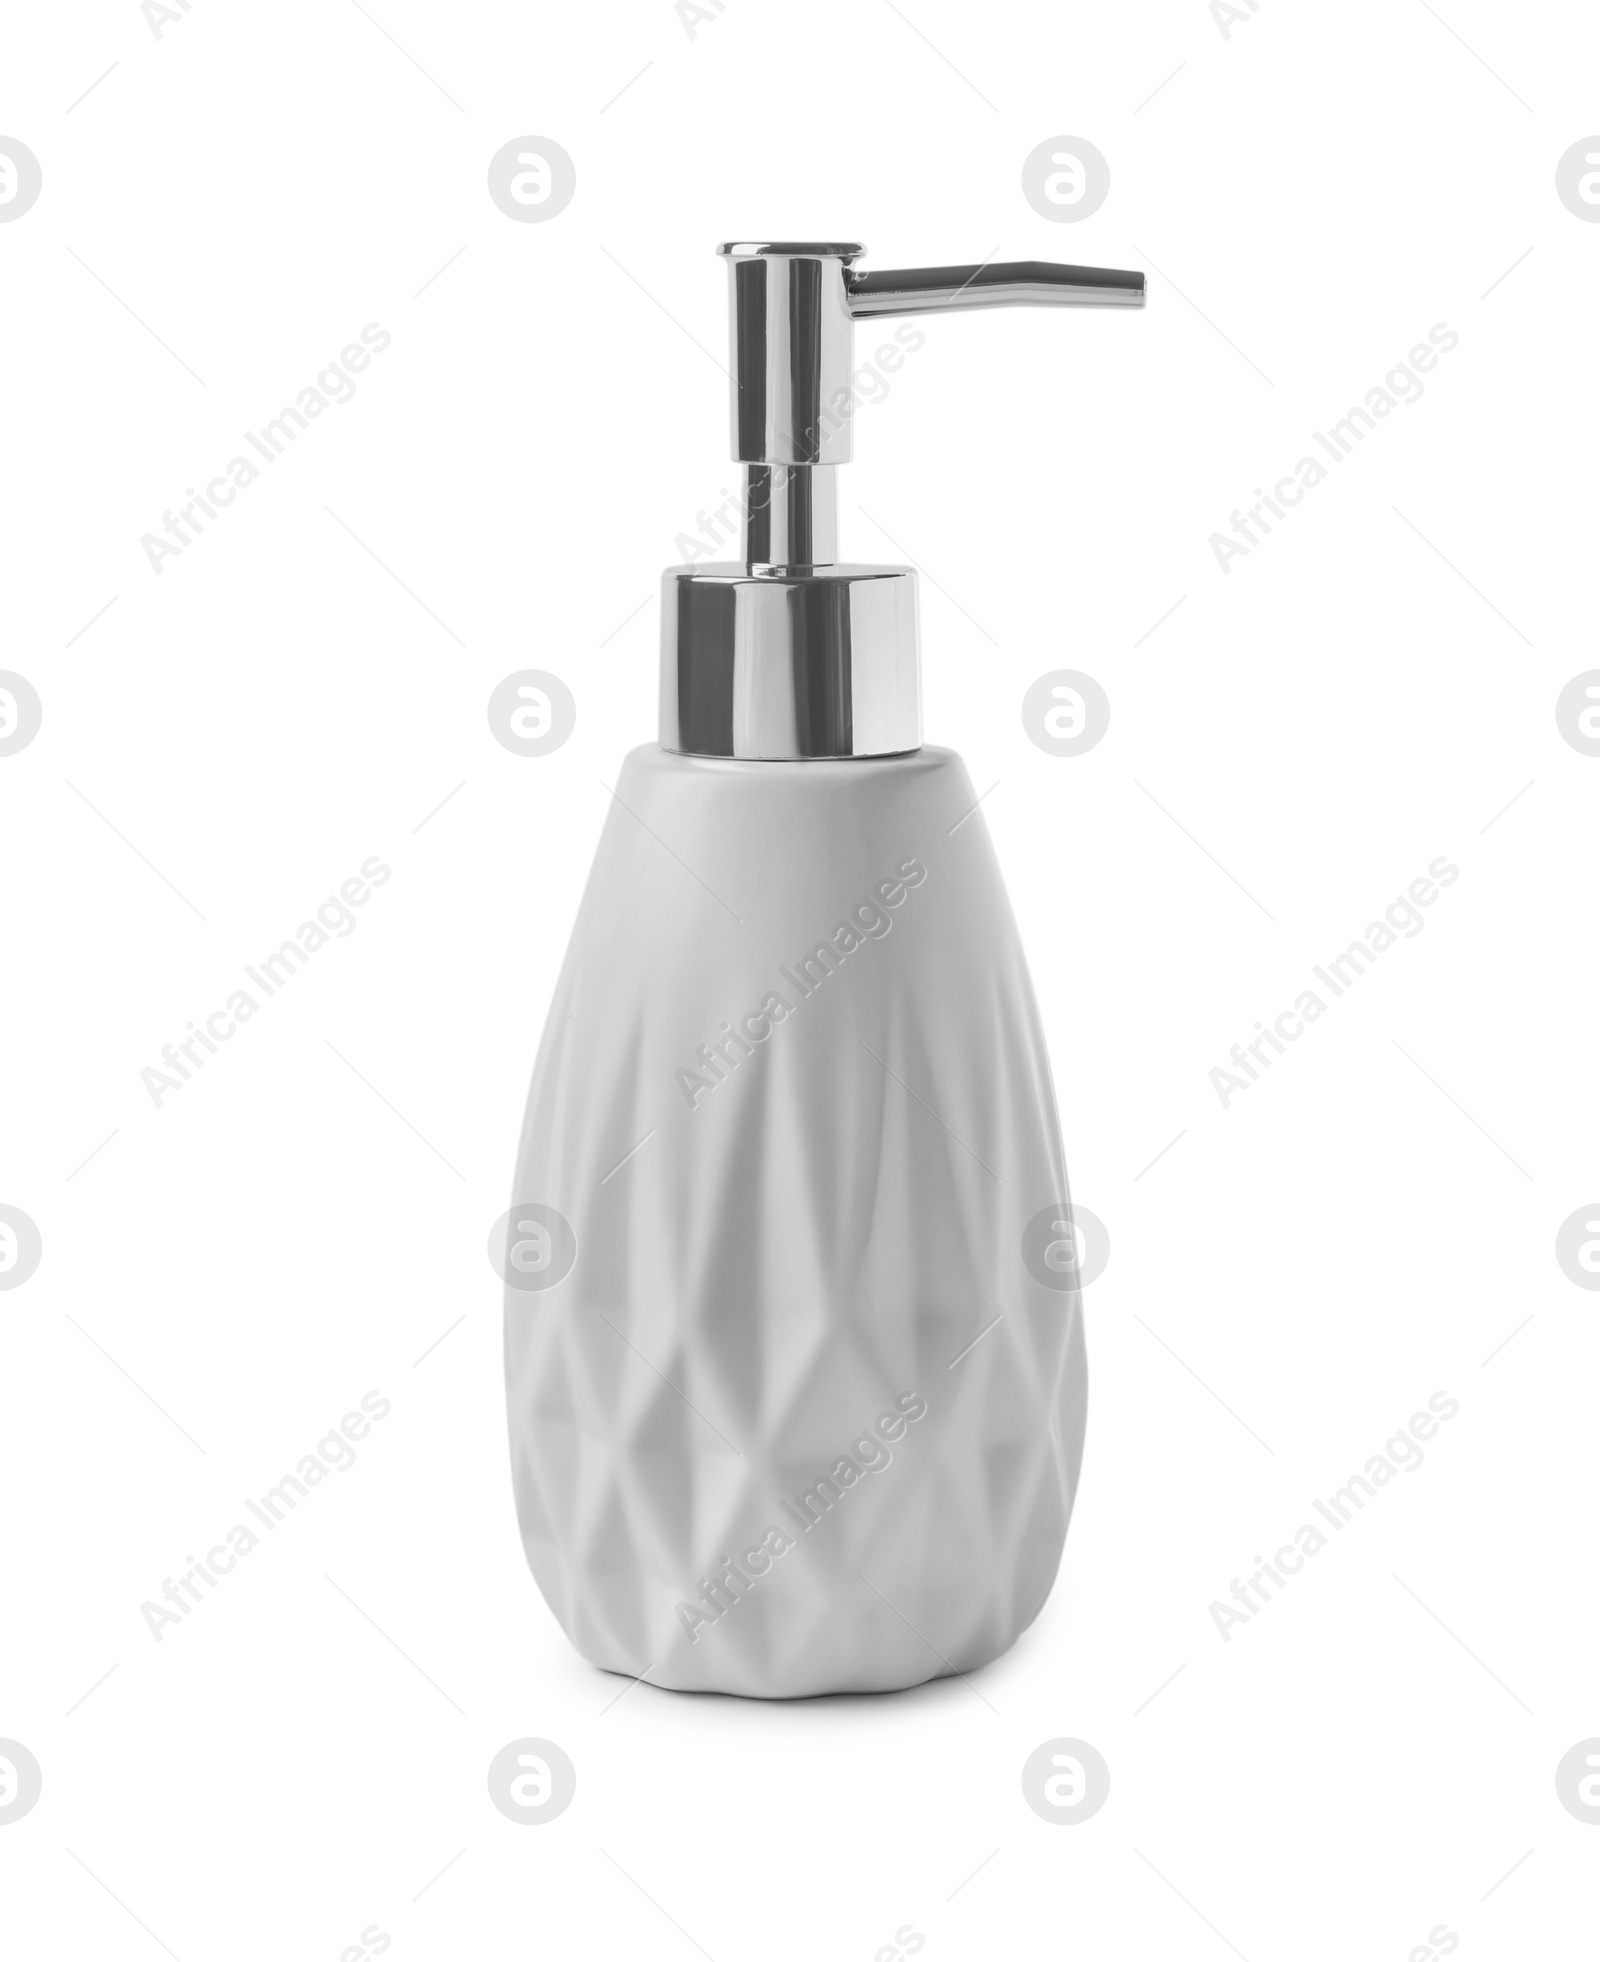 Photo of Bath accessory. Liquid soap dispenser isolated on white